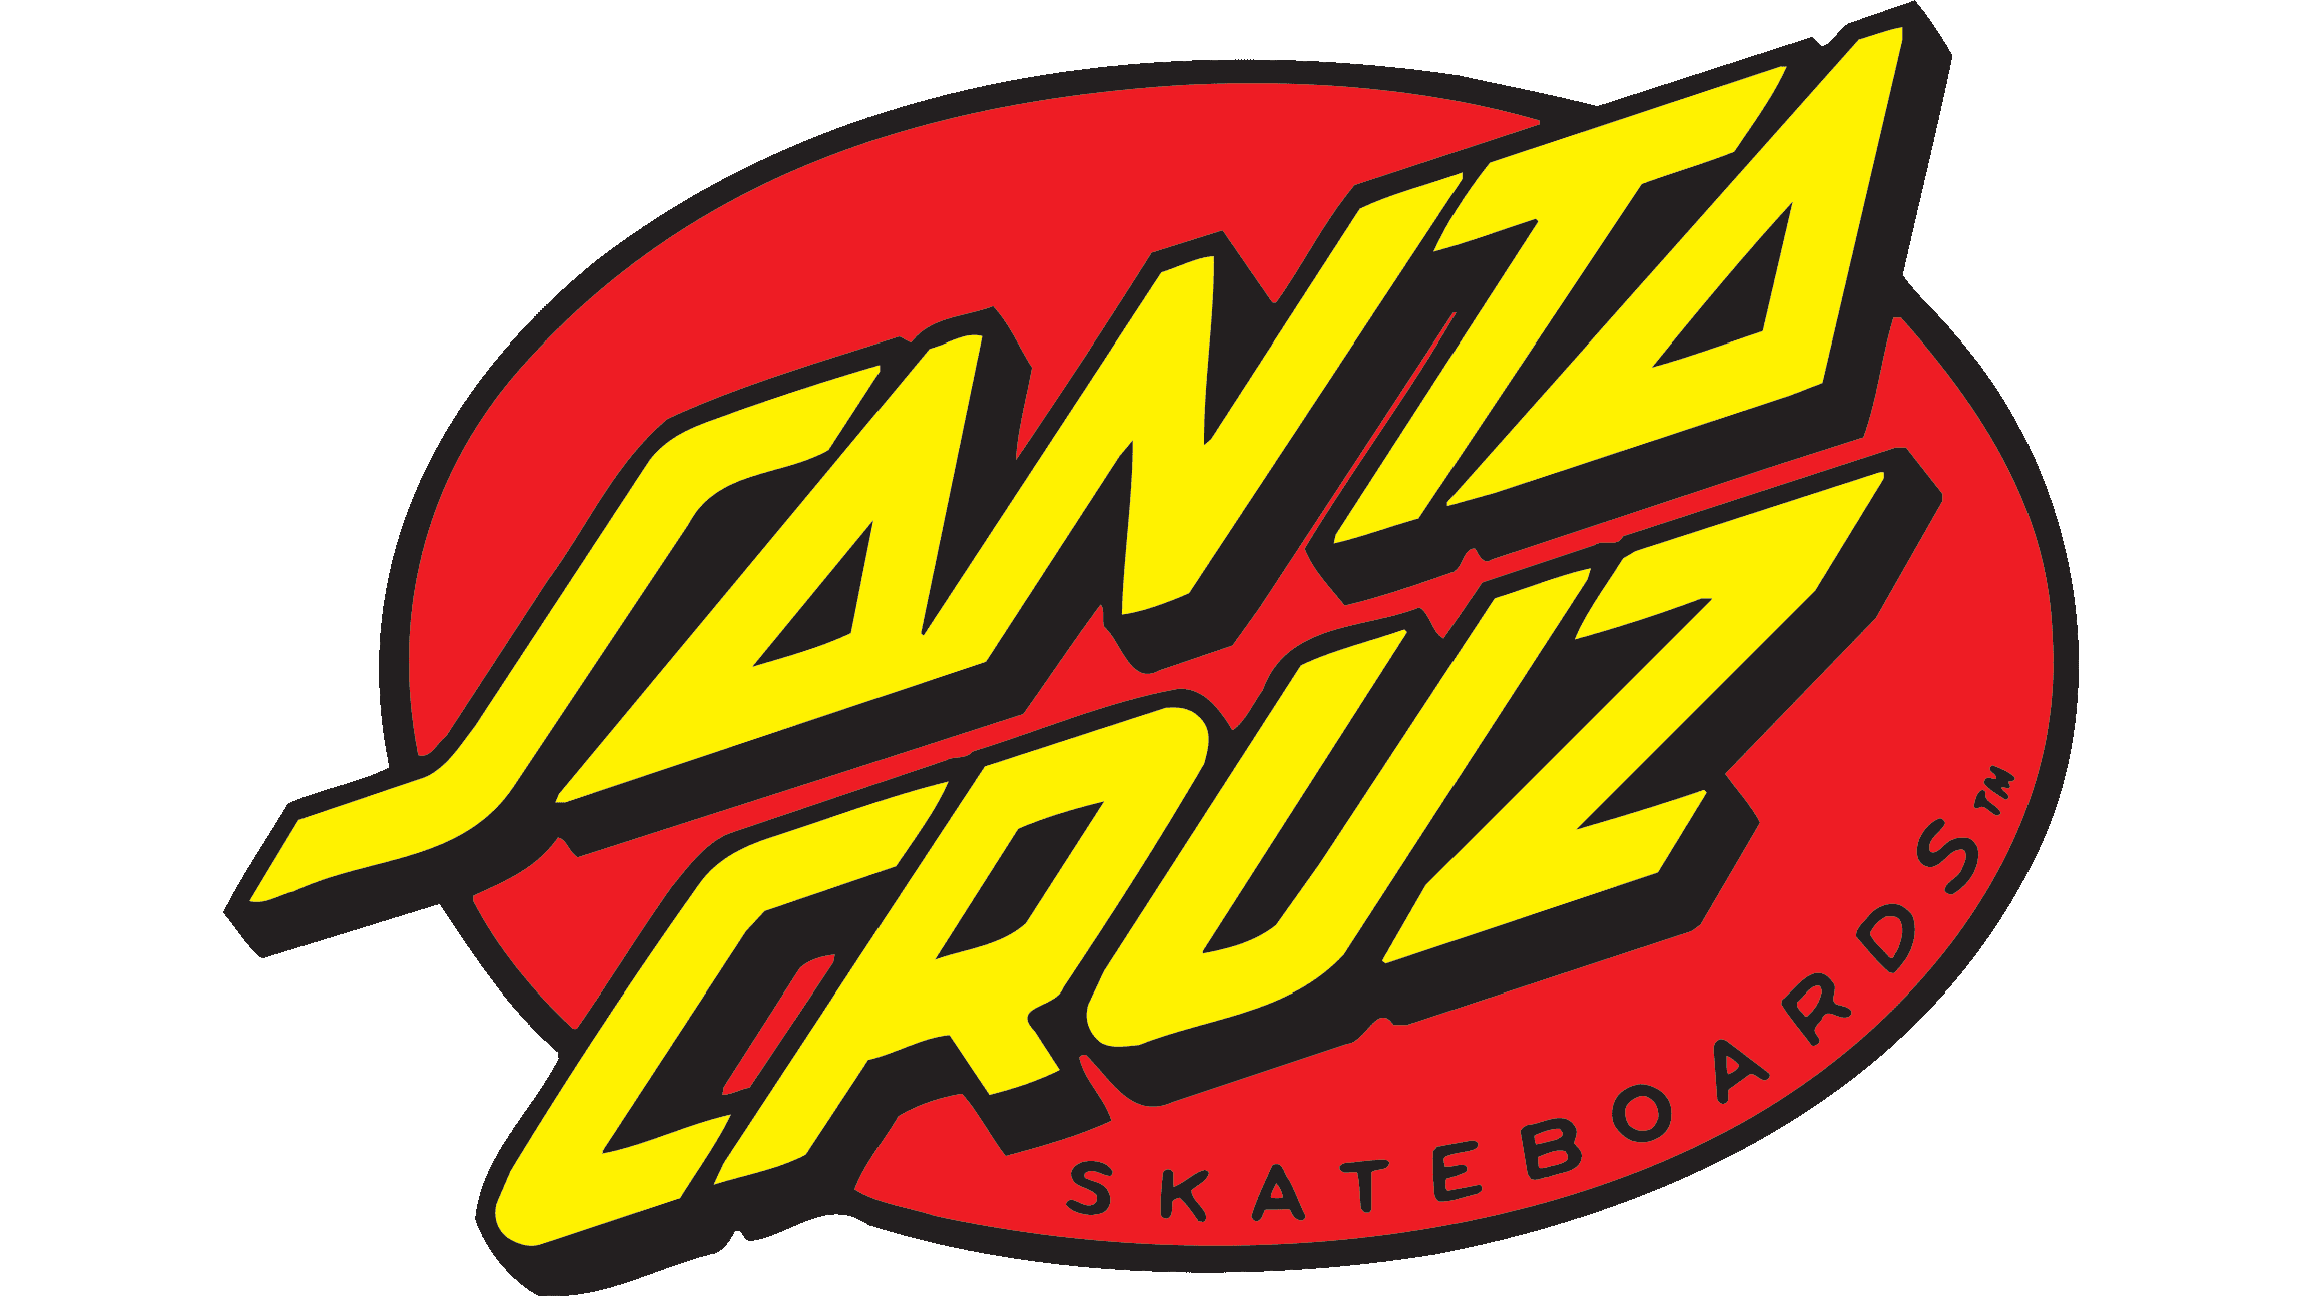 Santa Cruz Skateboards Official Store